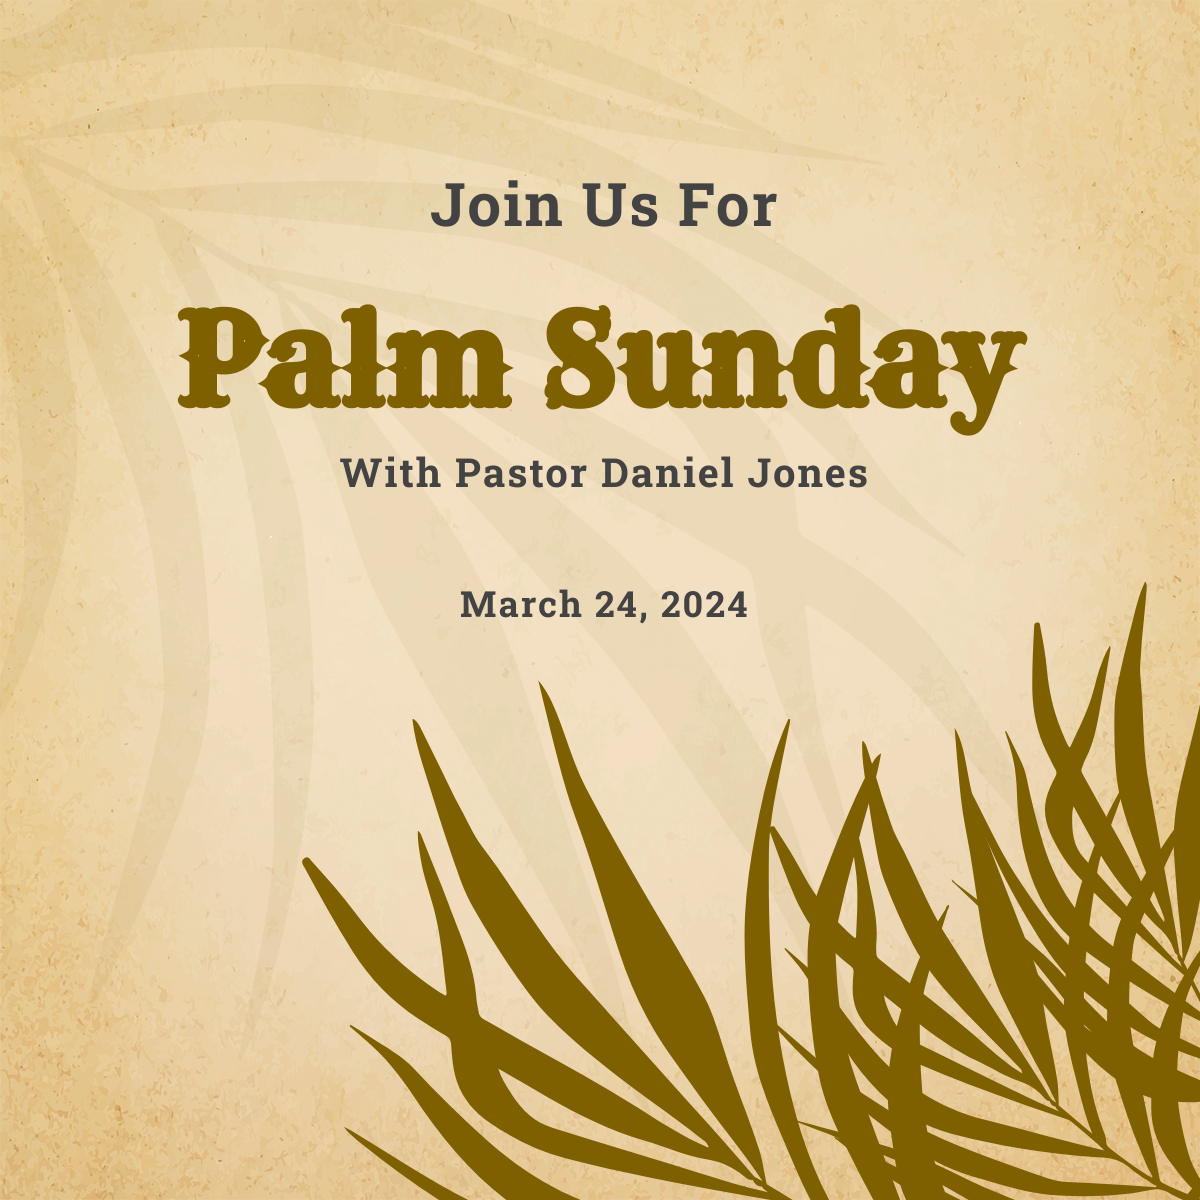 Free Vintage Palm Sunday Linkedin Post Template